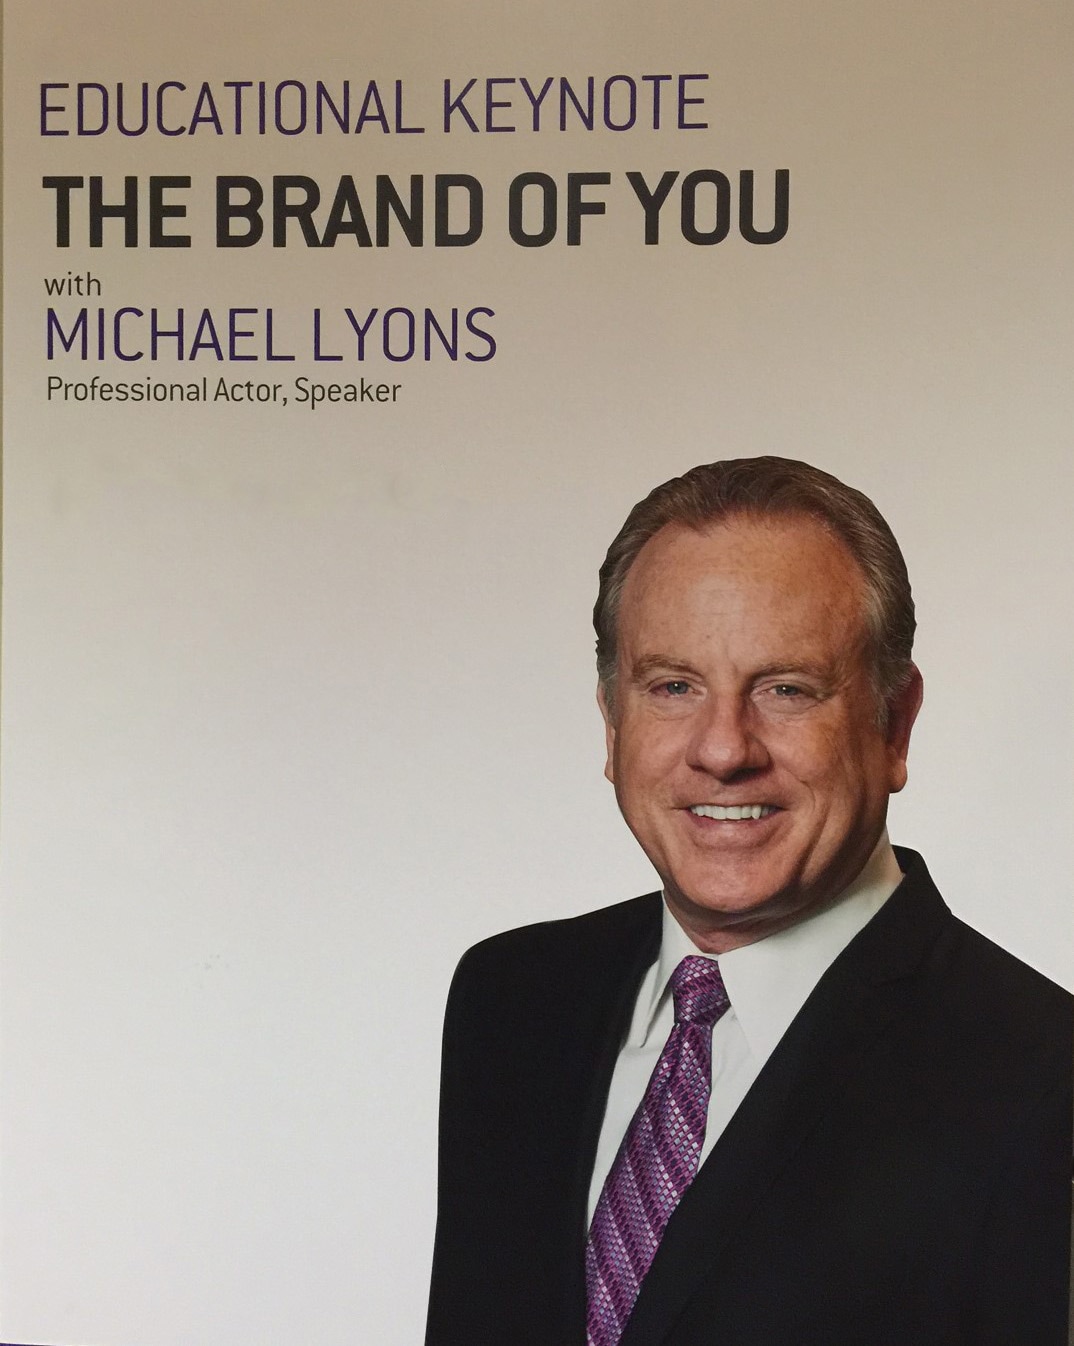 Michael Lyons Brand of You Speaker inspirational motivational